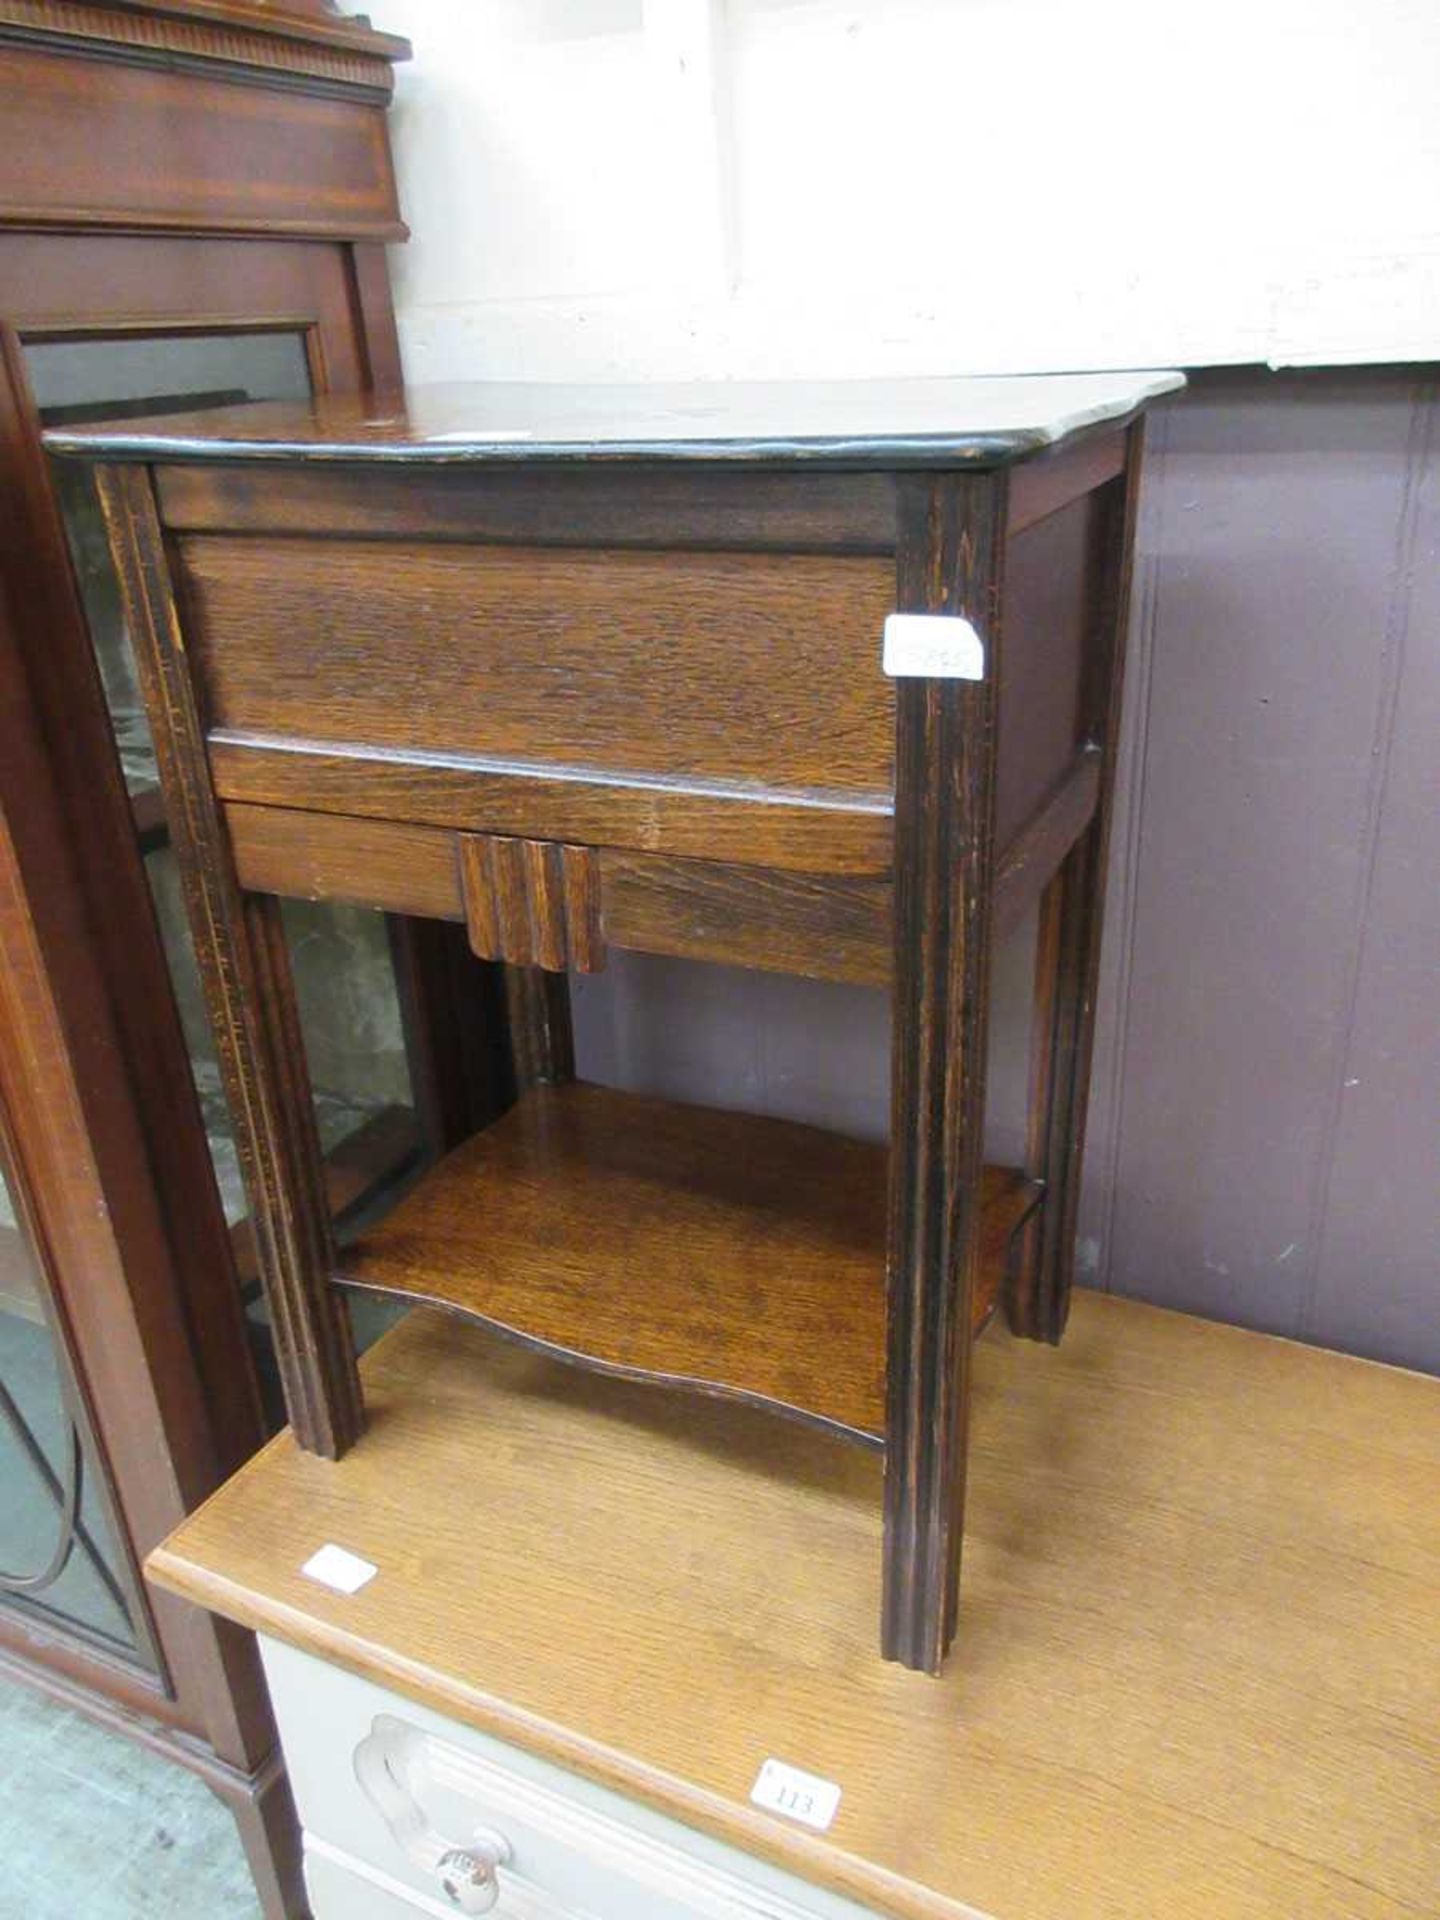 An early 20th century oak work box